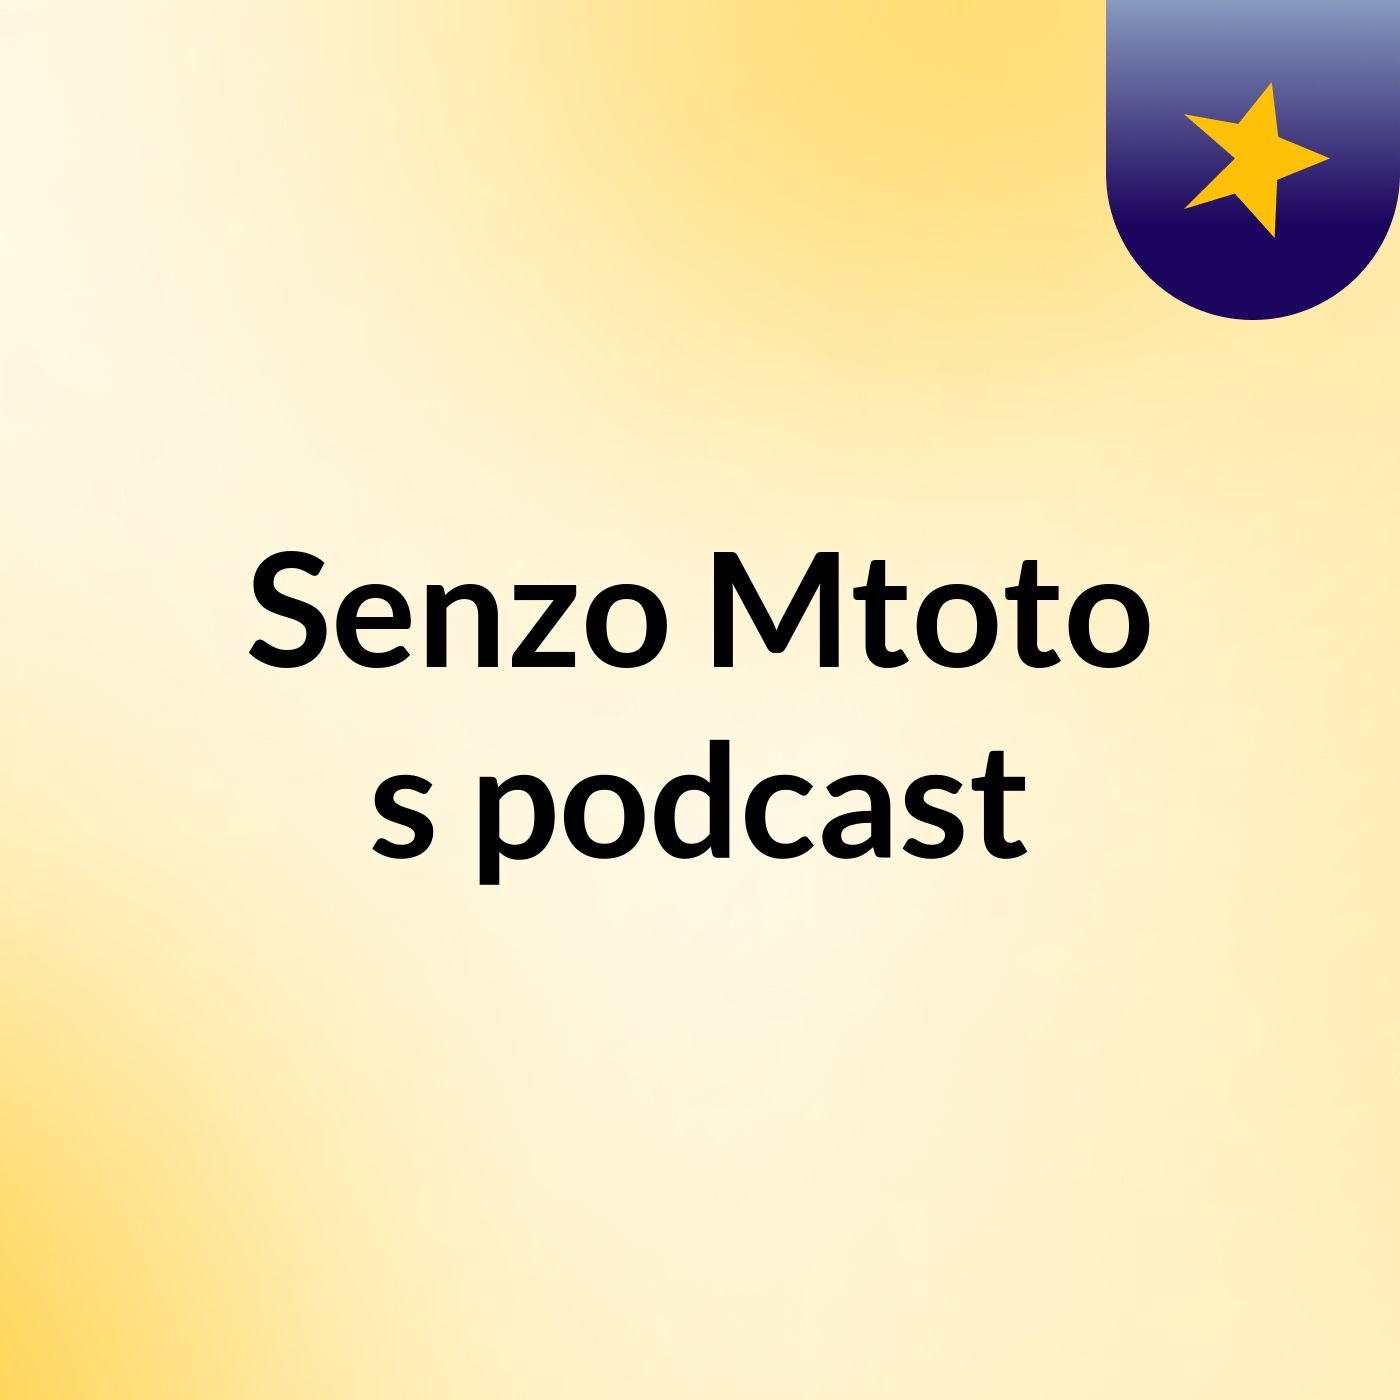 Senzo Mtoto's podcast